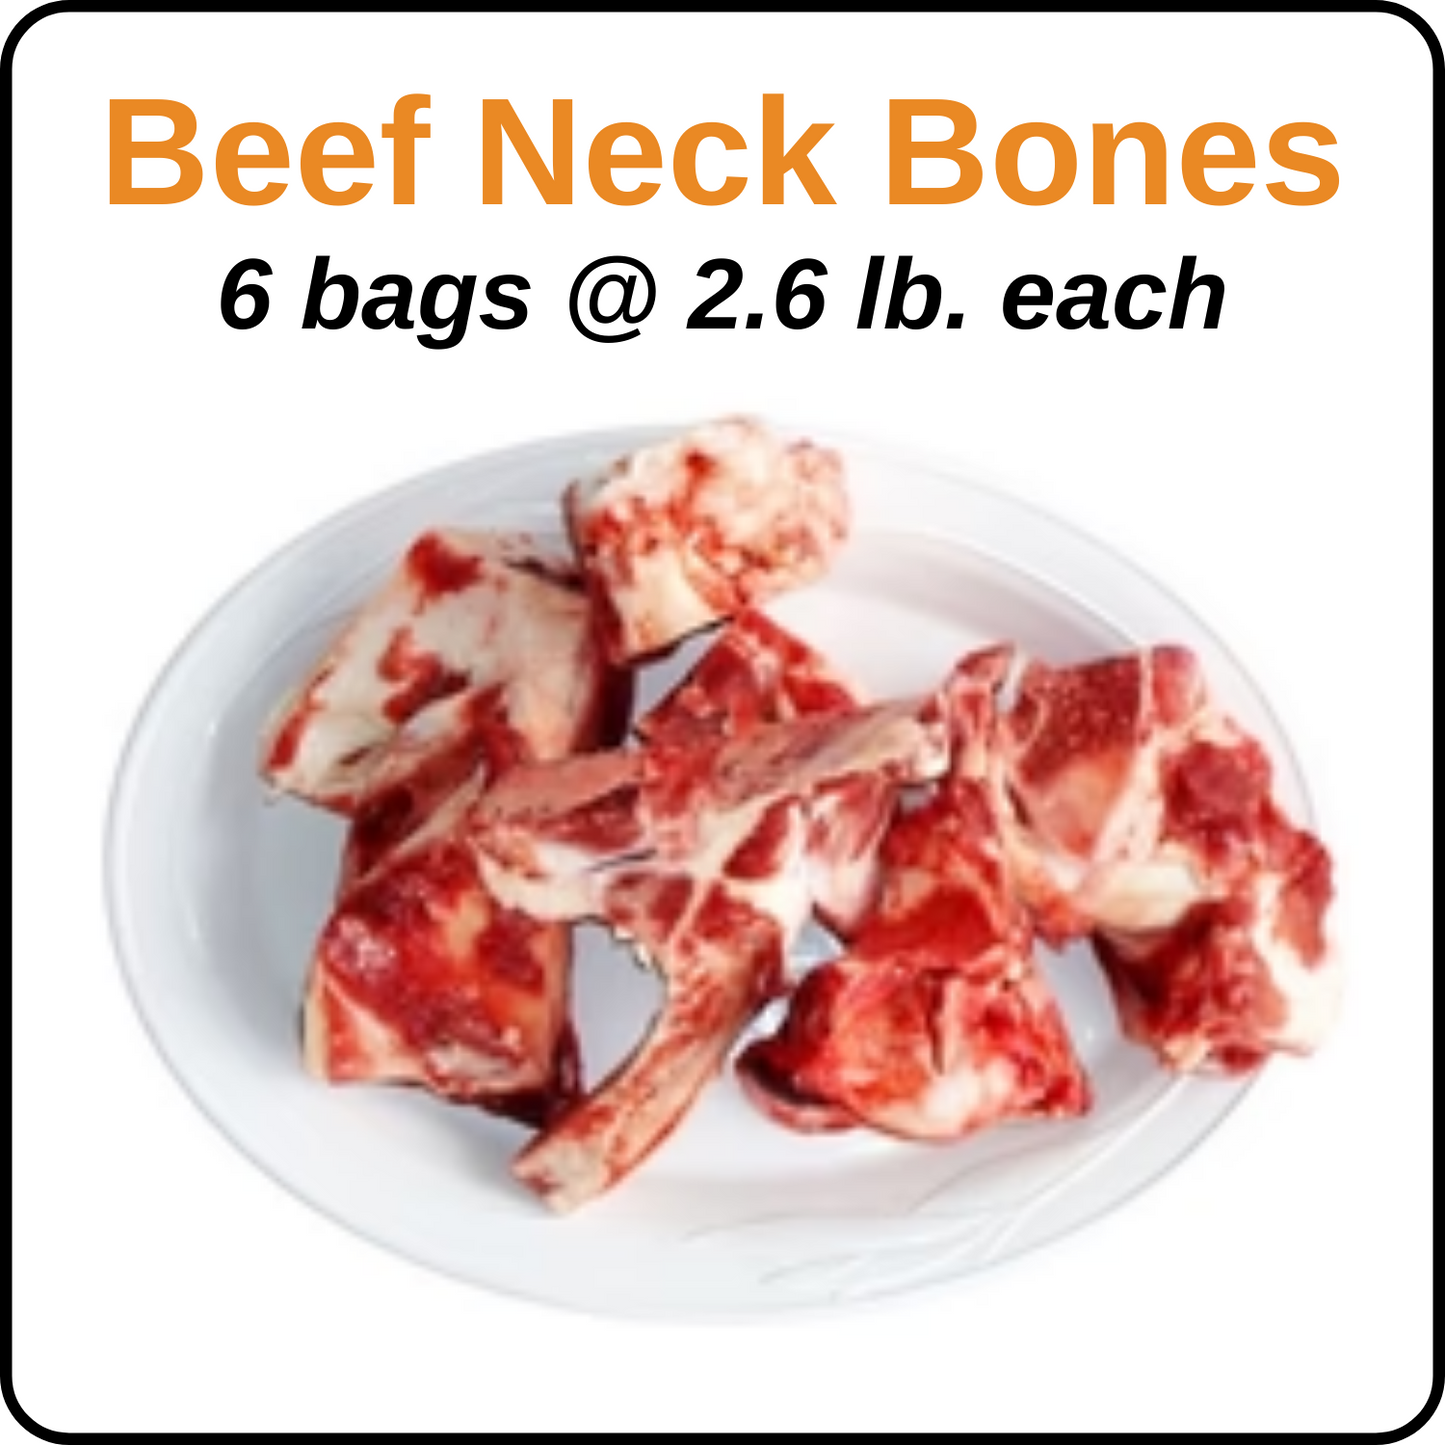 Beef Neck Bones - 6 bag package